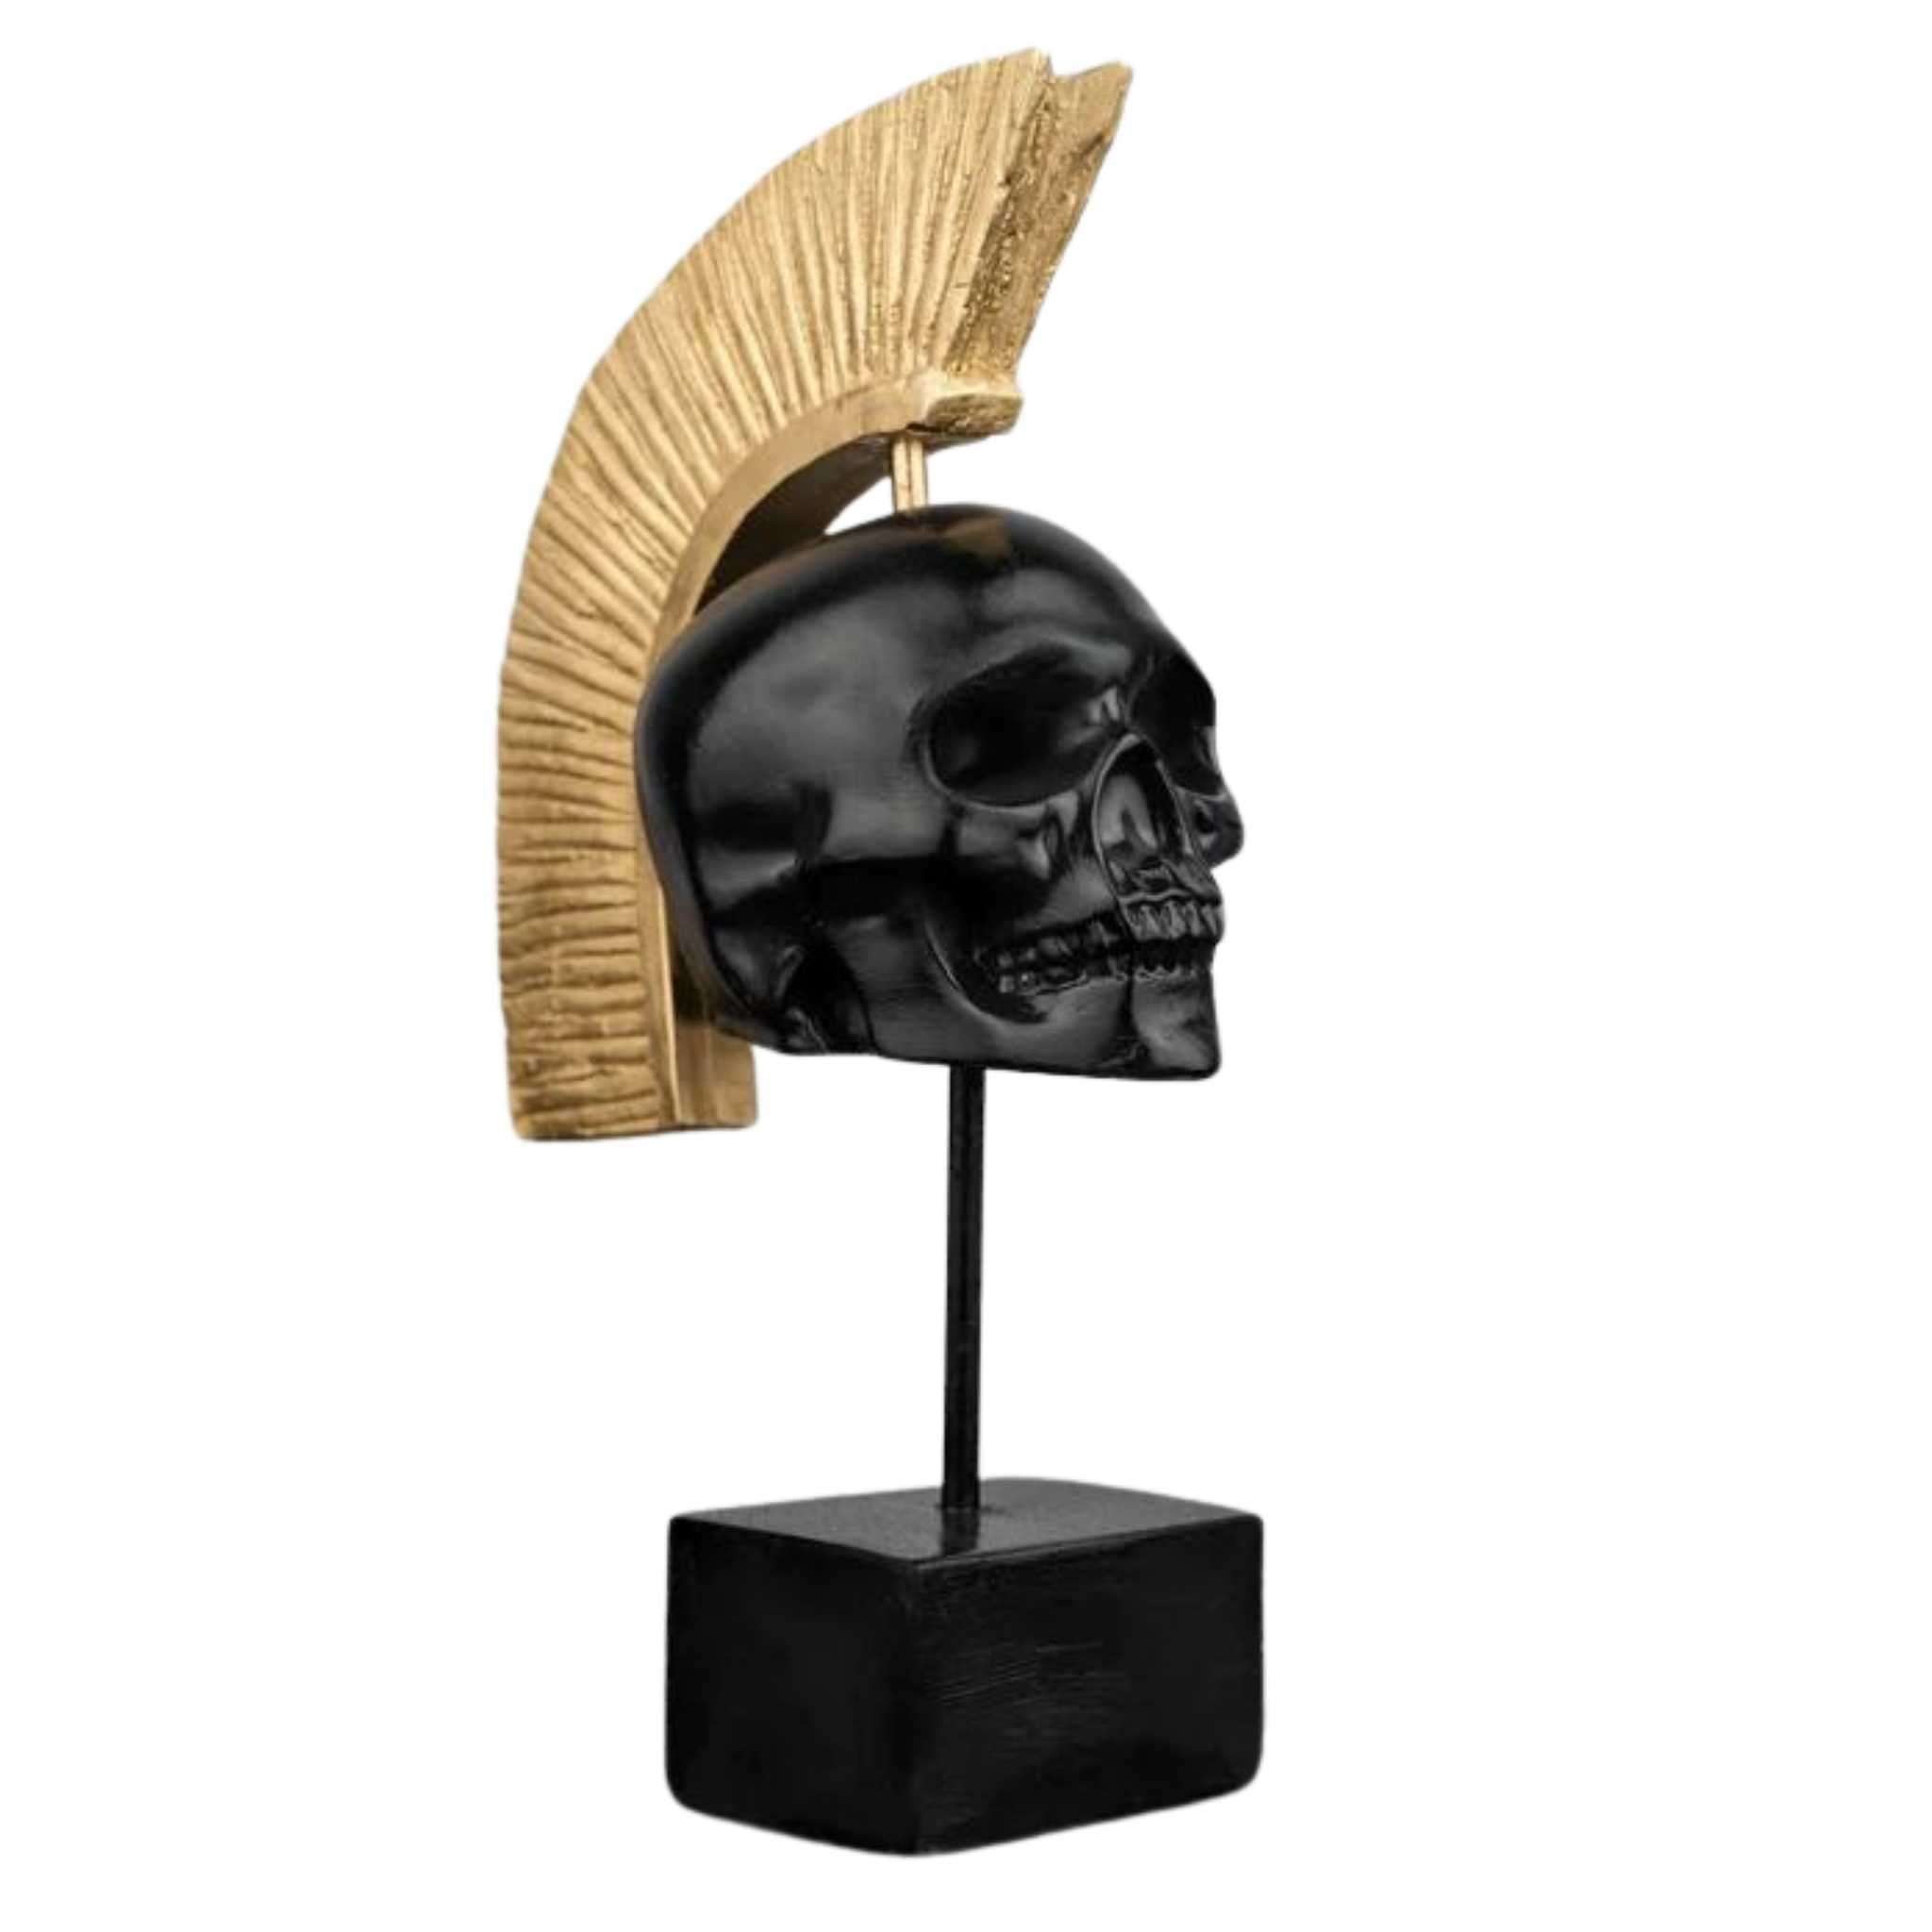 Golden Gaze: The Design Skull Sculpture